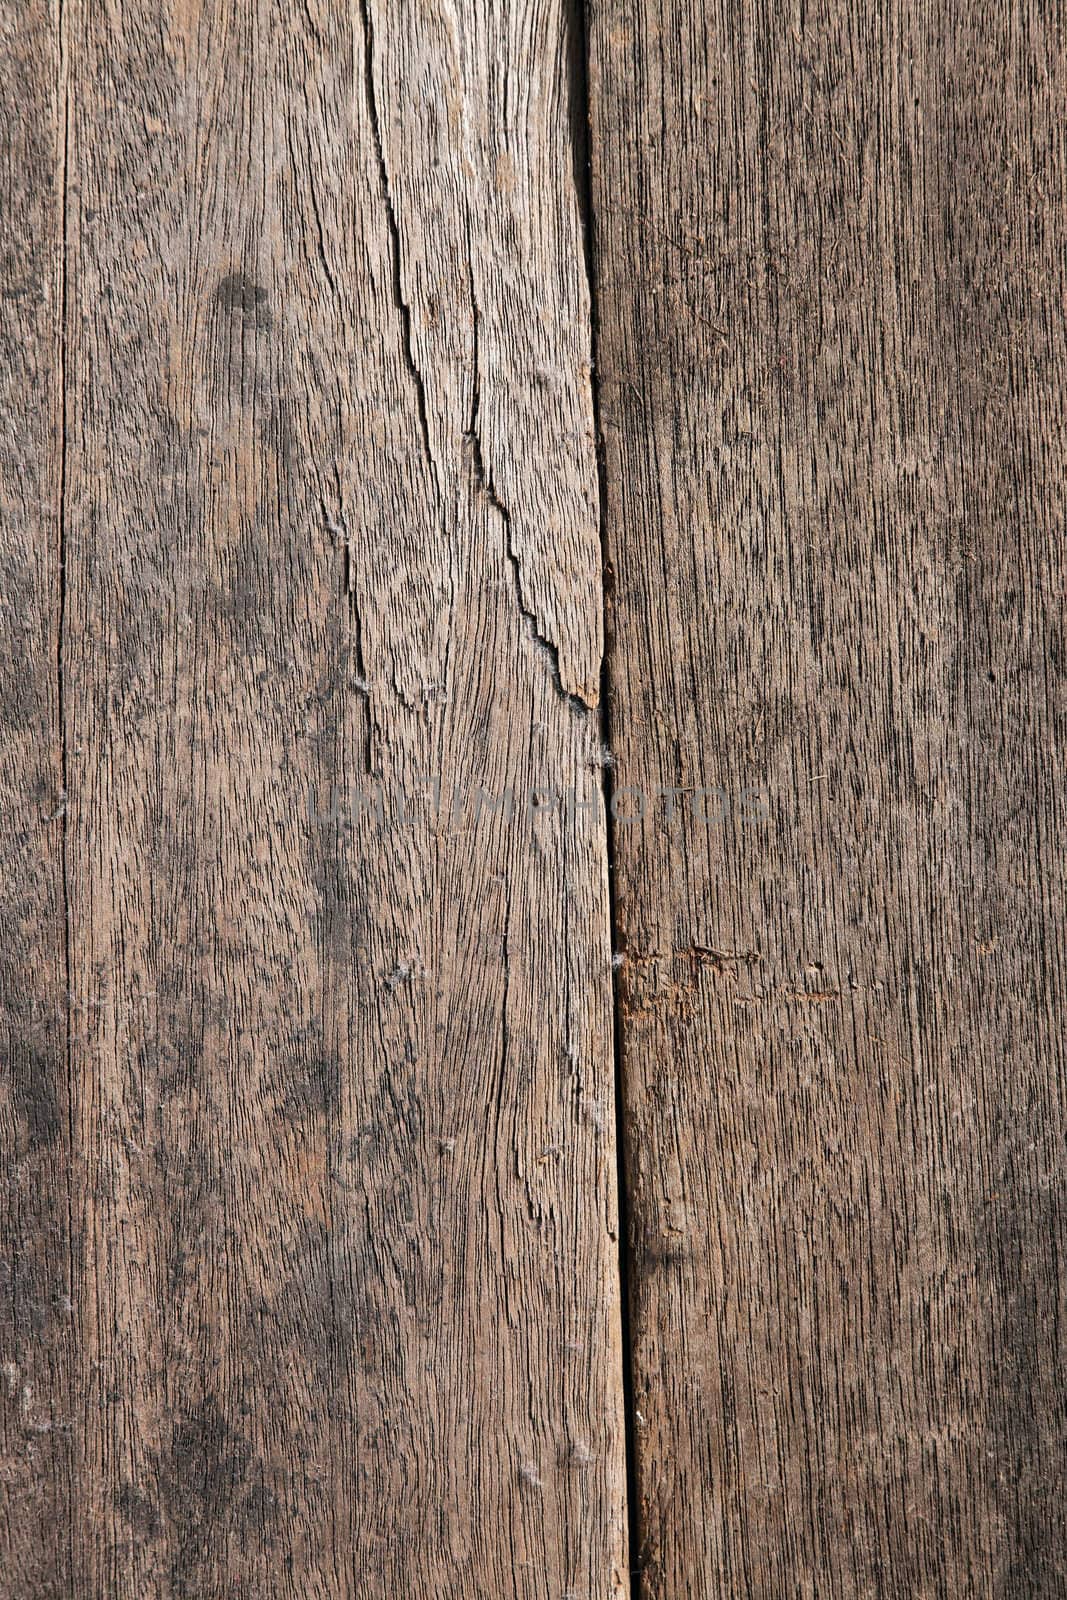 close up shot of wooden wall